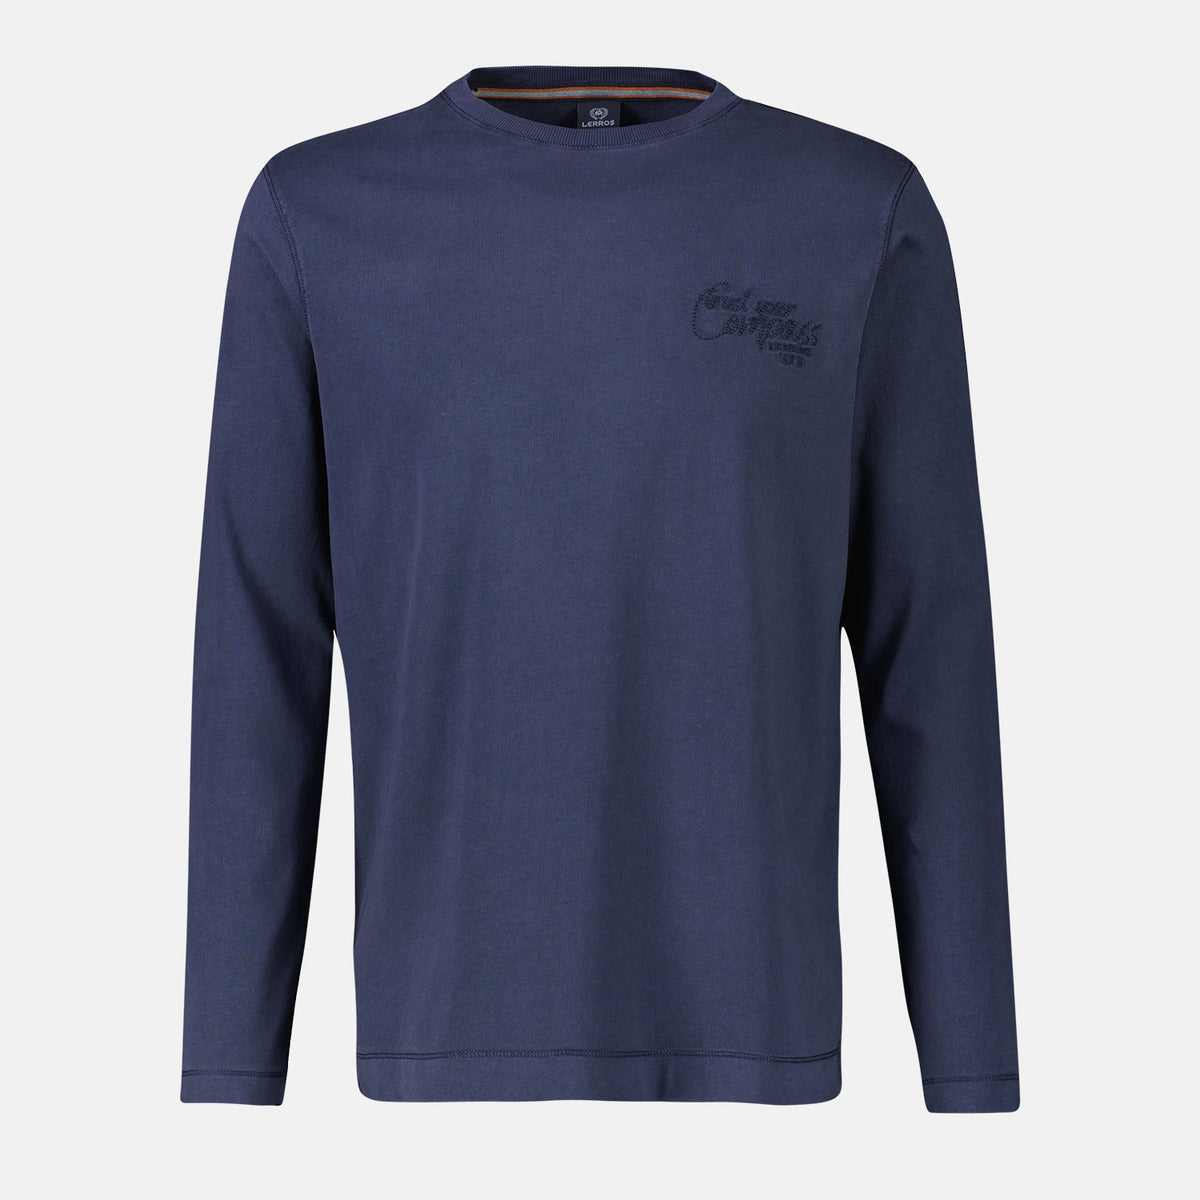 Plain-Colored Long-sleeve, – Lerros, Naboulsi Distinction T-Shirt Navy